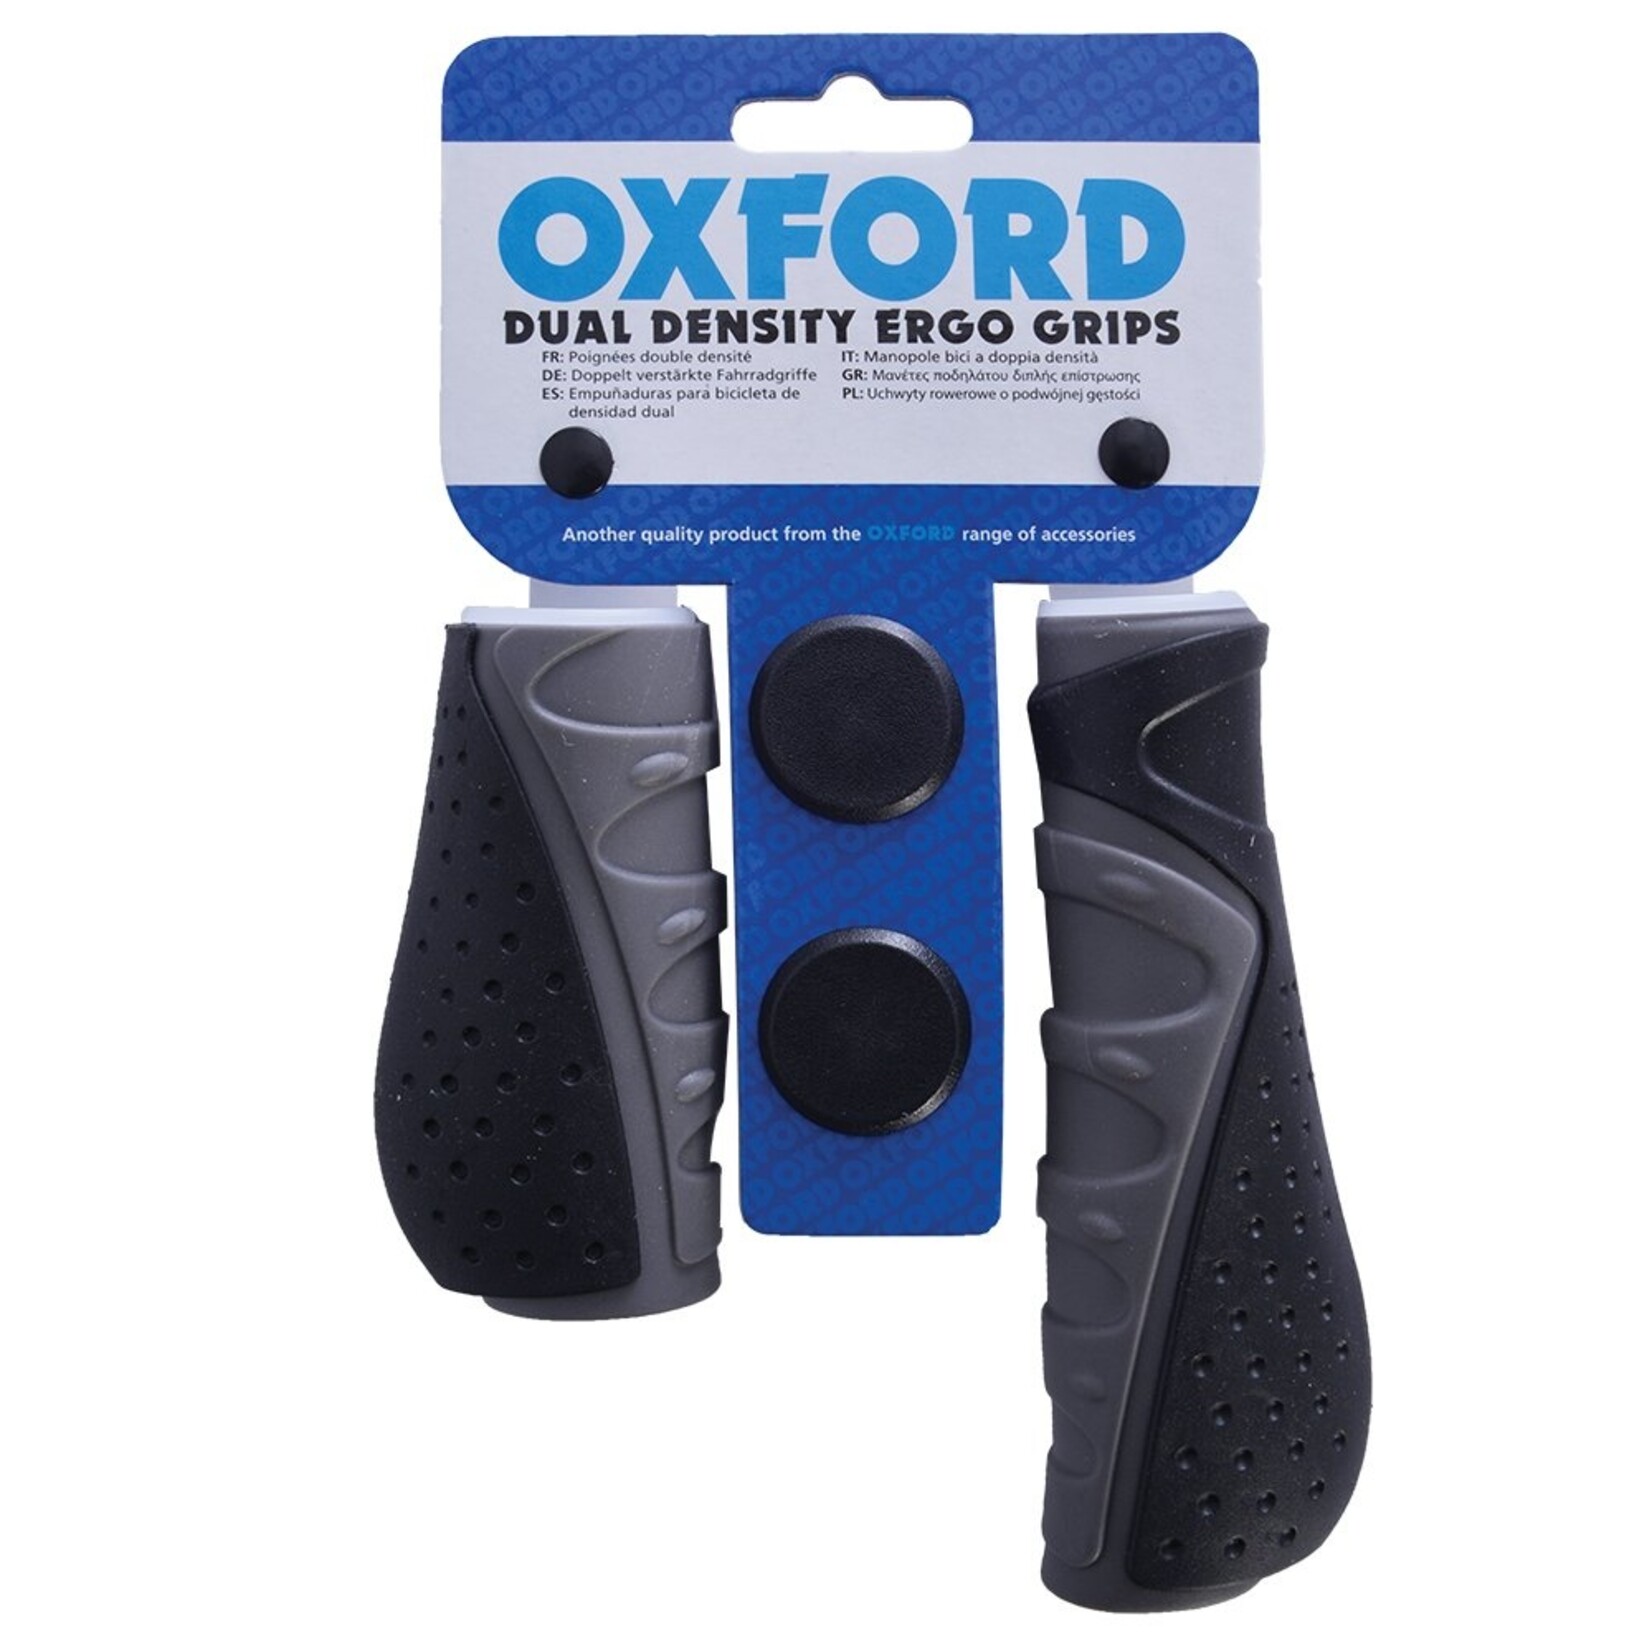 Oxford Oxford Dual Density Ergo Gripshift Grips